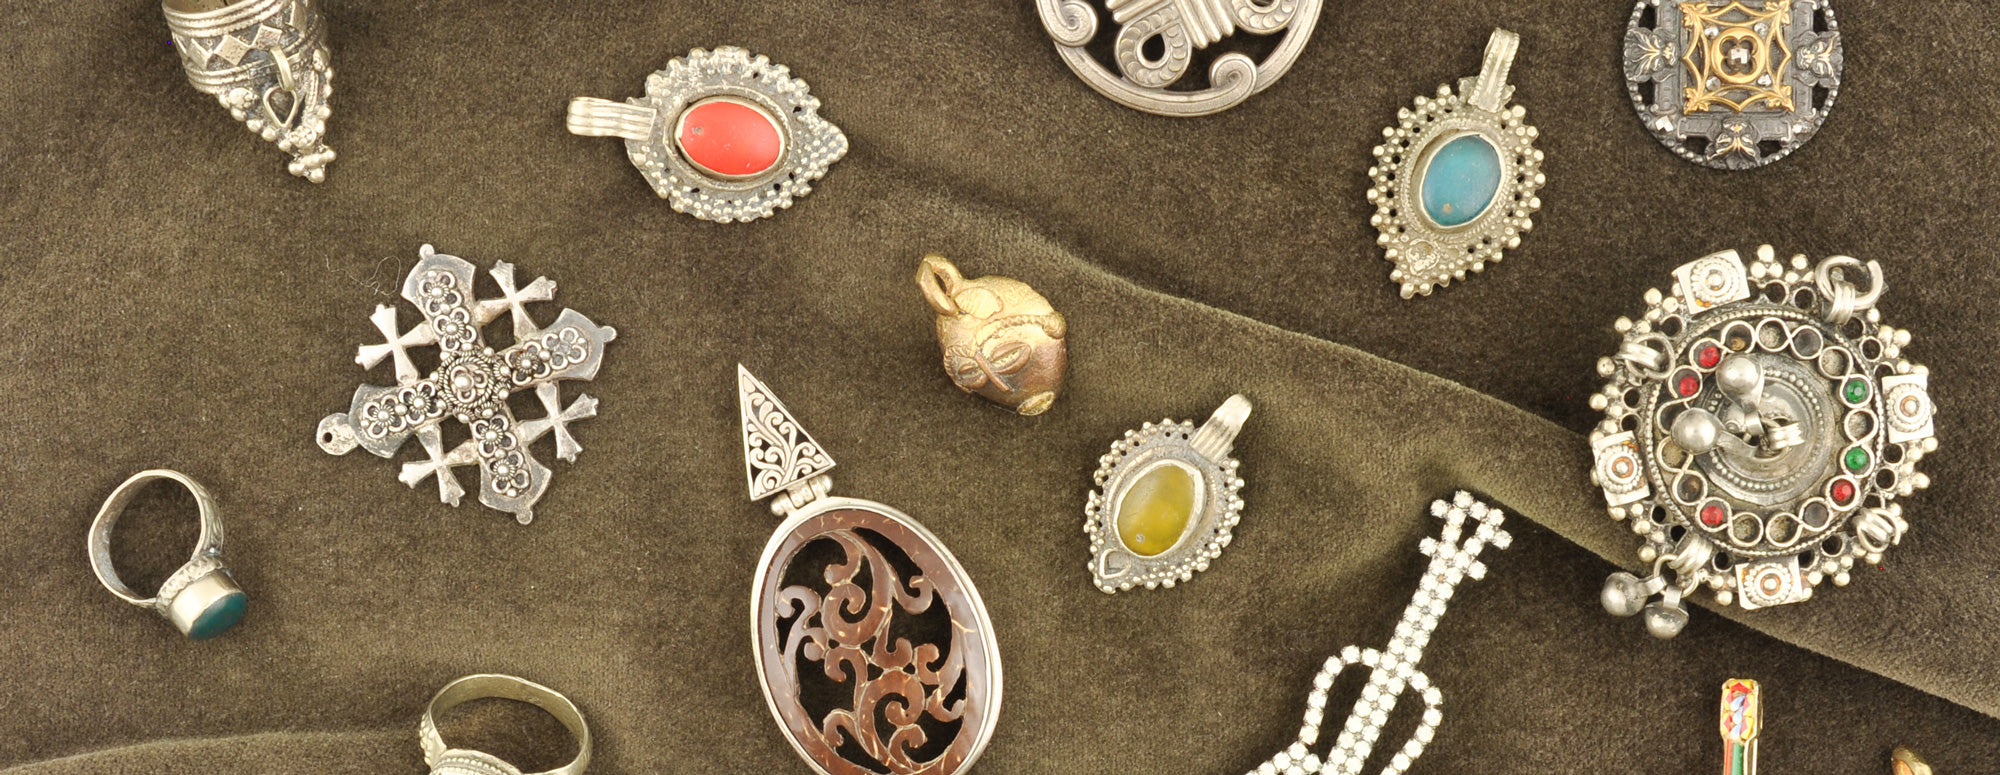 Vintage Jewelry Tamara Scott Designs